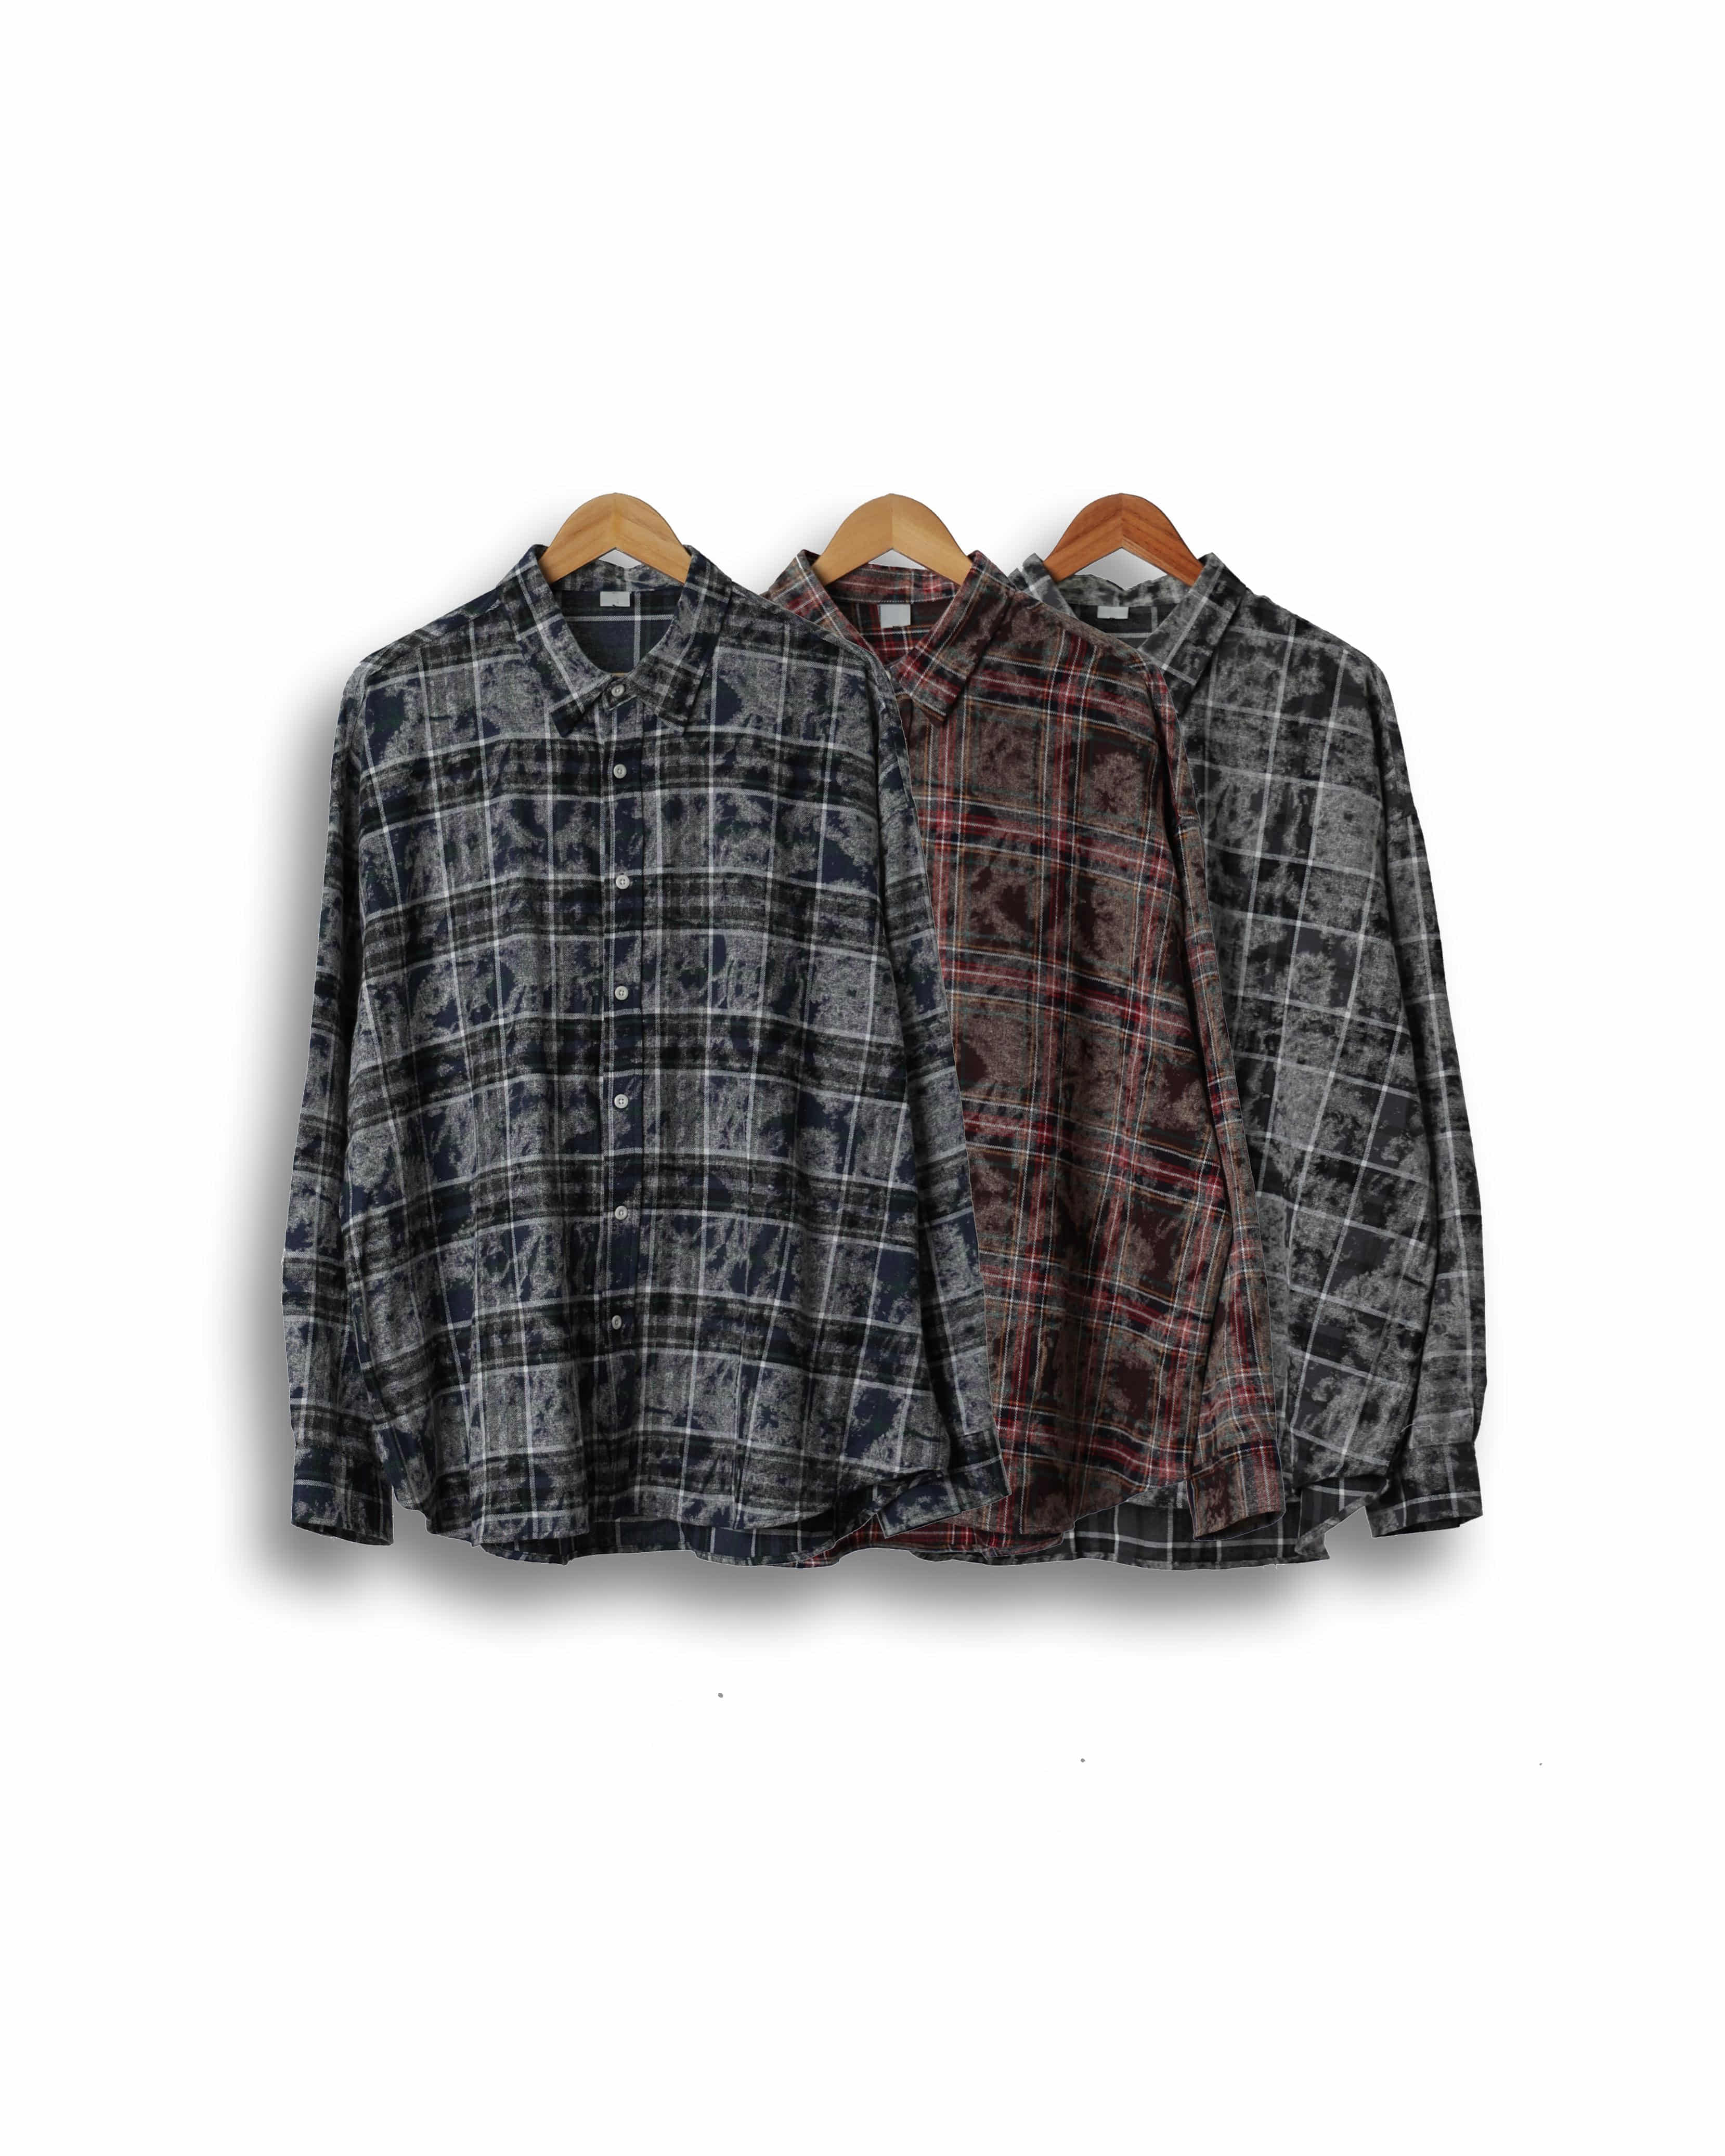 L.FRK Snow Washed Vintage Check Shirts (Black/Navy/Brown)